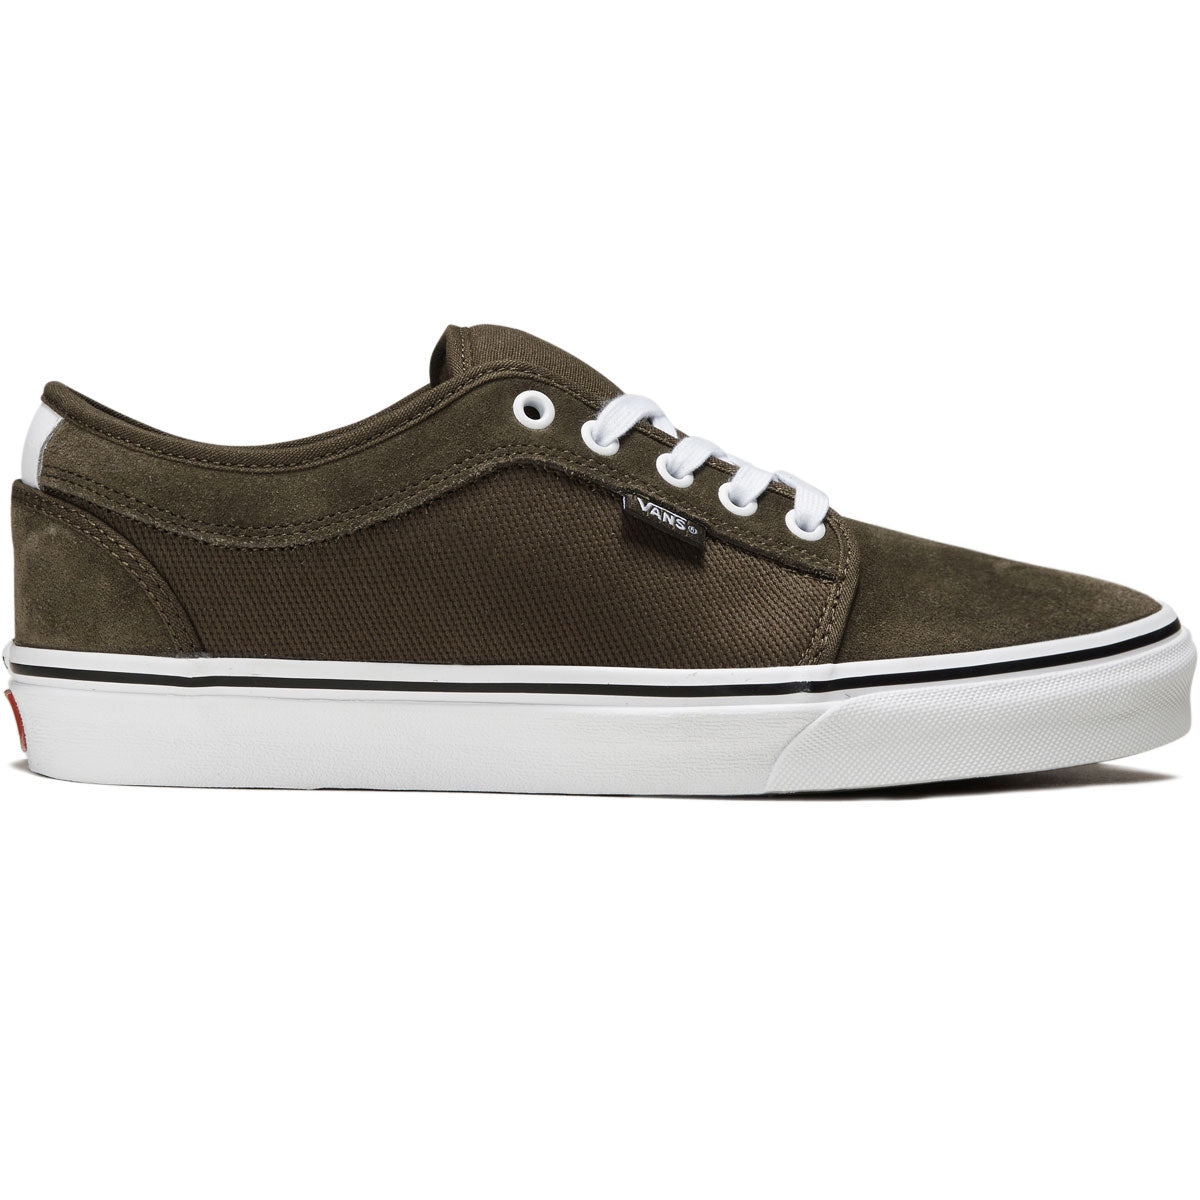 Vans Skate Chukka Low Shoes - Dark Olive/White image 1